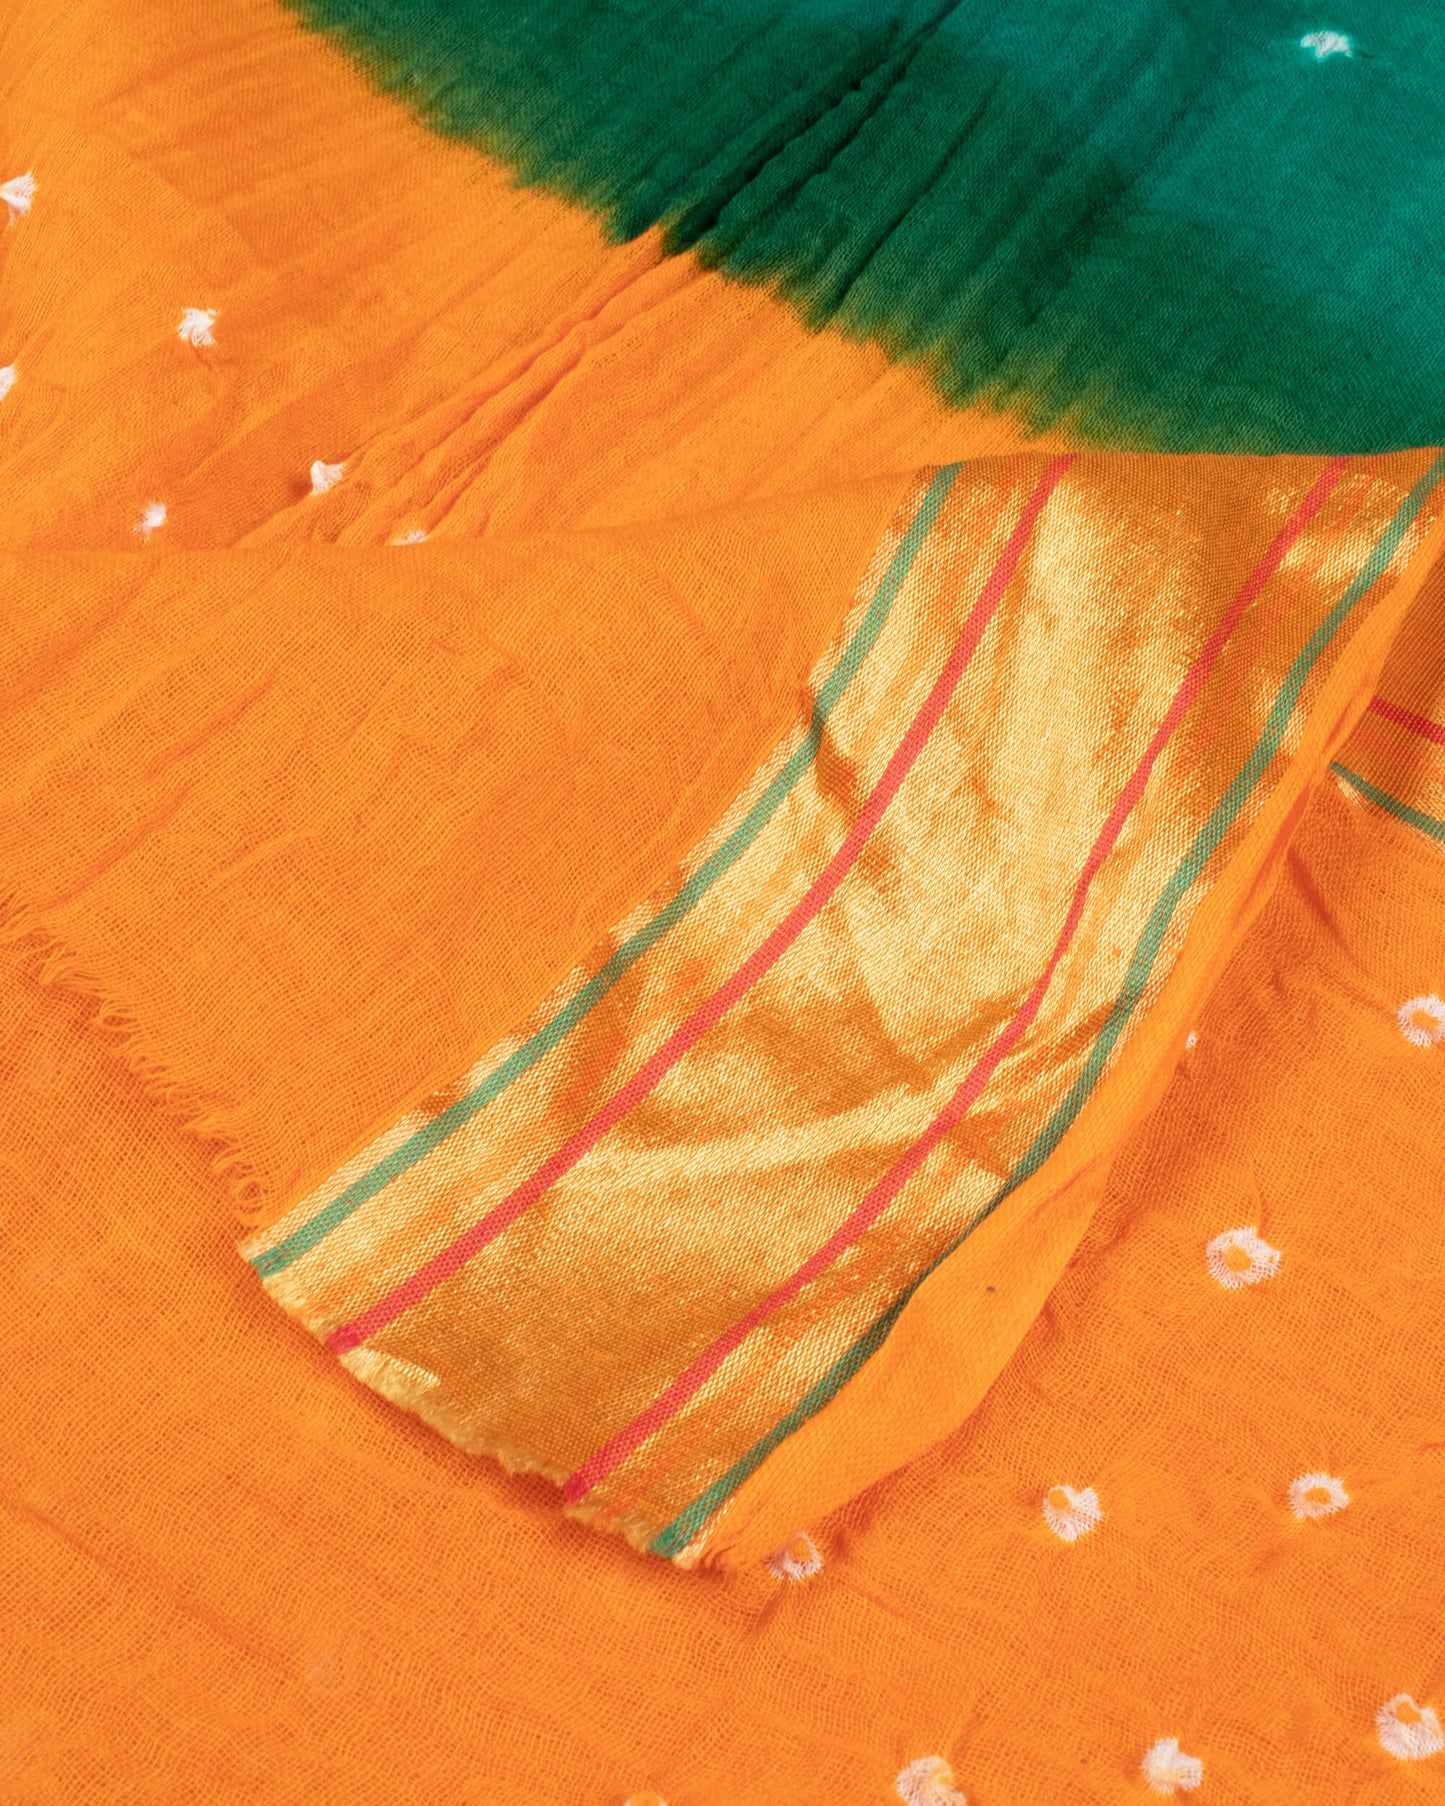 Honey Yellow And Green Kutchi Bandhani Foil Mirror Work Unstitched Cotton Suit With Zari Border Dupatta